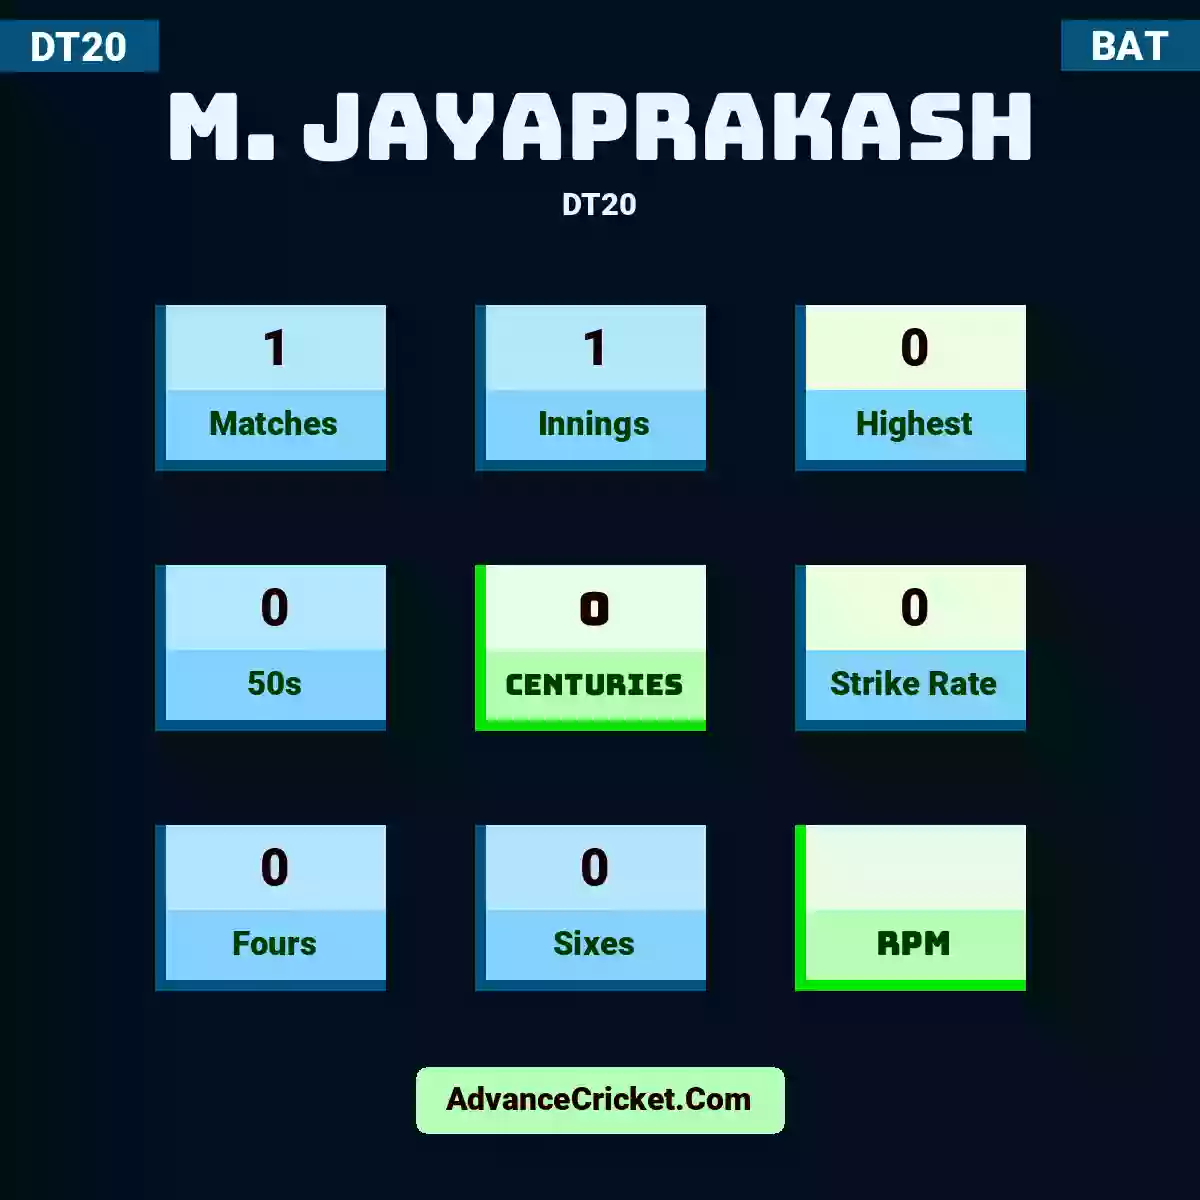 M. Jayaprakash DT20 , M. Jayaprakash played 1 matches, scored 0 runs as highest, 0 half-centuries, and 0 centuries, with a strike rate of 0. M.Jayaprakash hit 0 fours and 0 sixes.